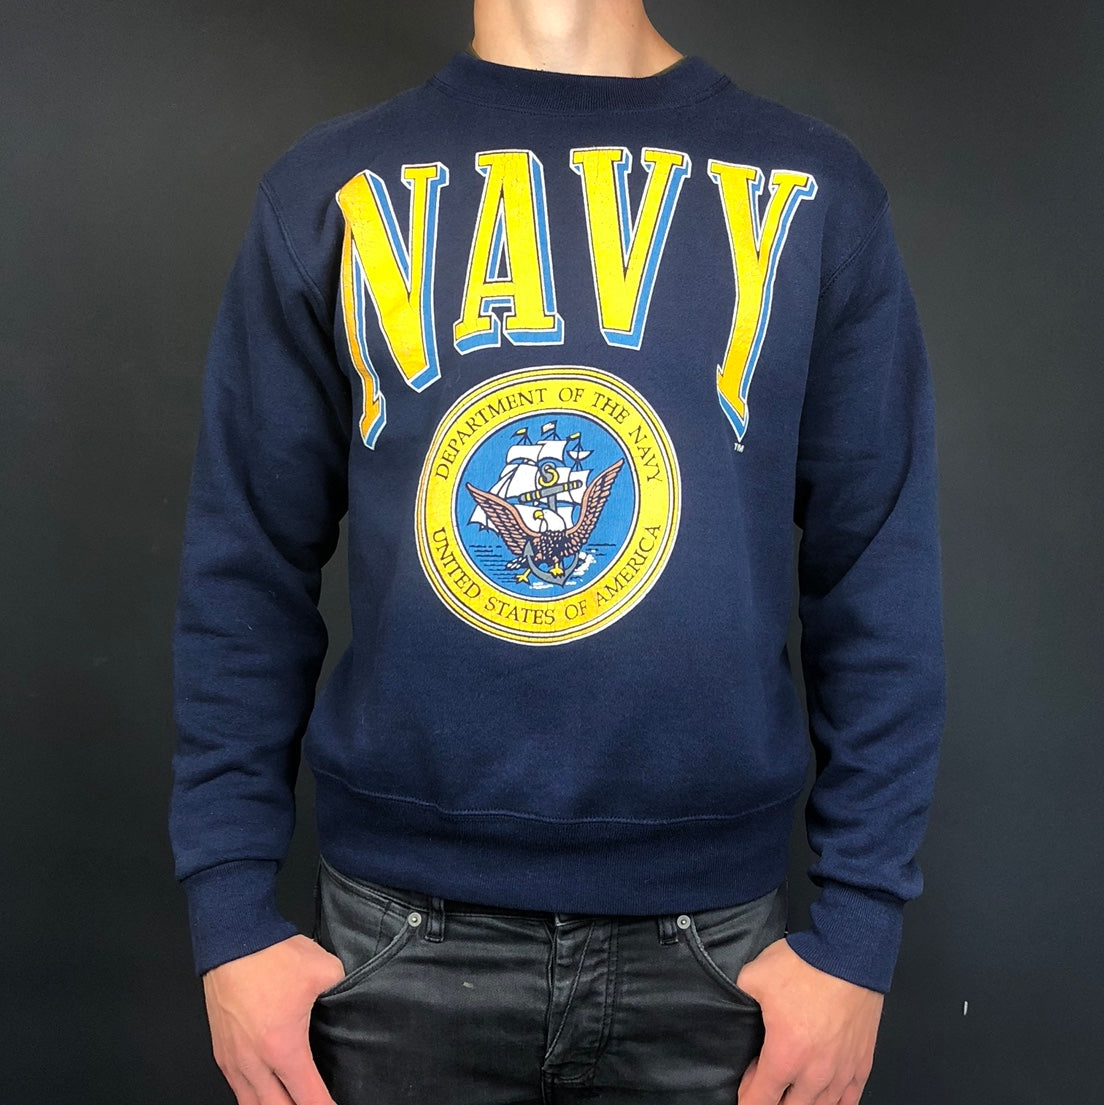 Unbranded Vintage NAVY Spellout Sweatshirt - Large